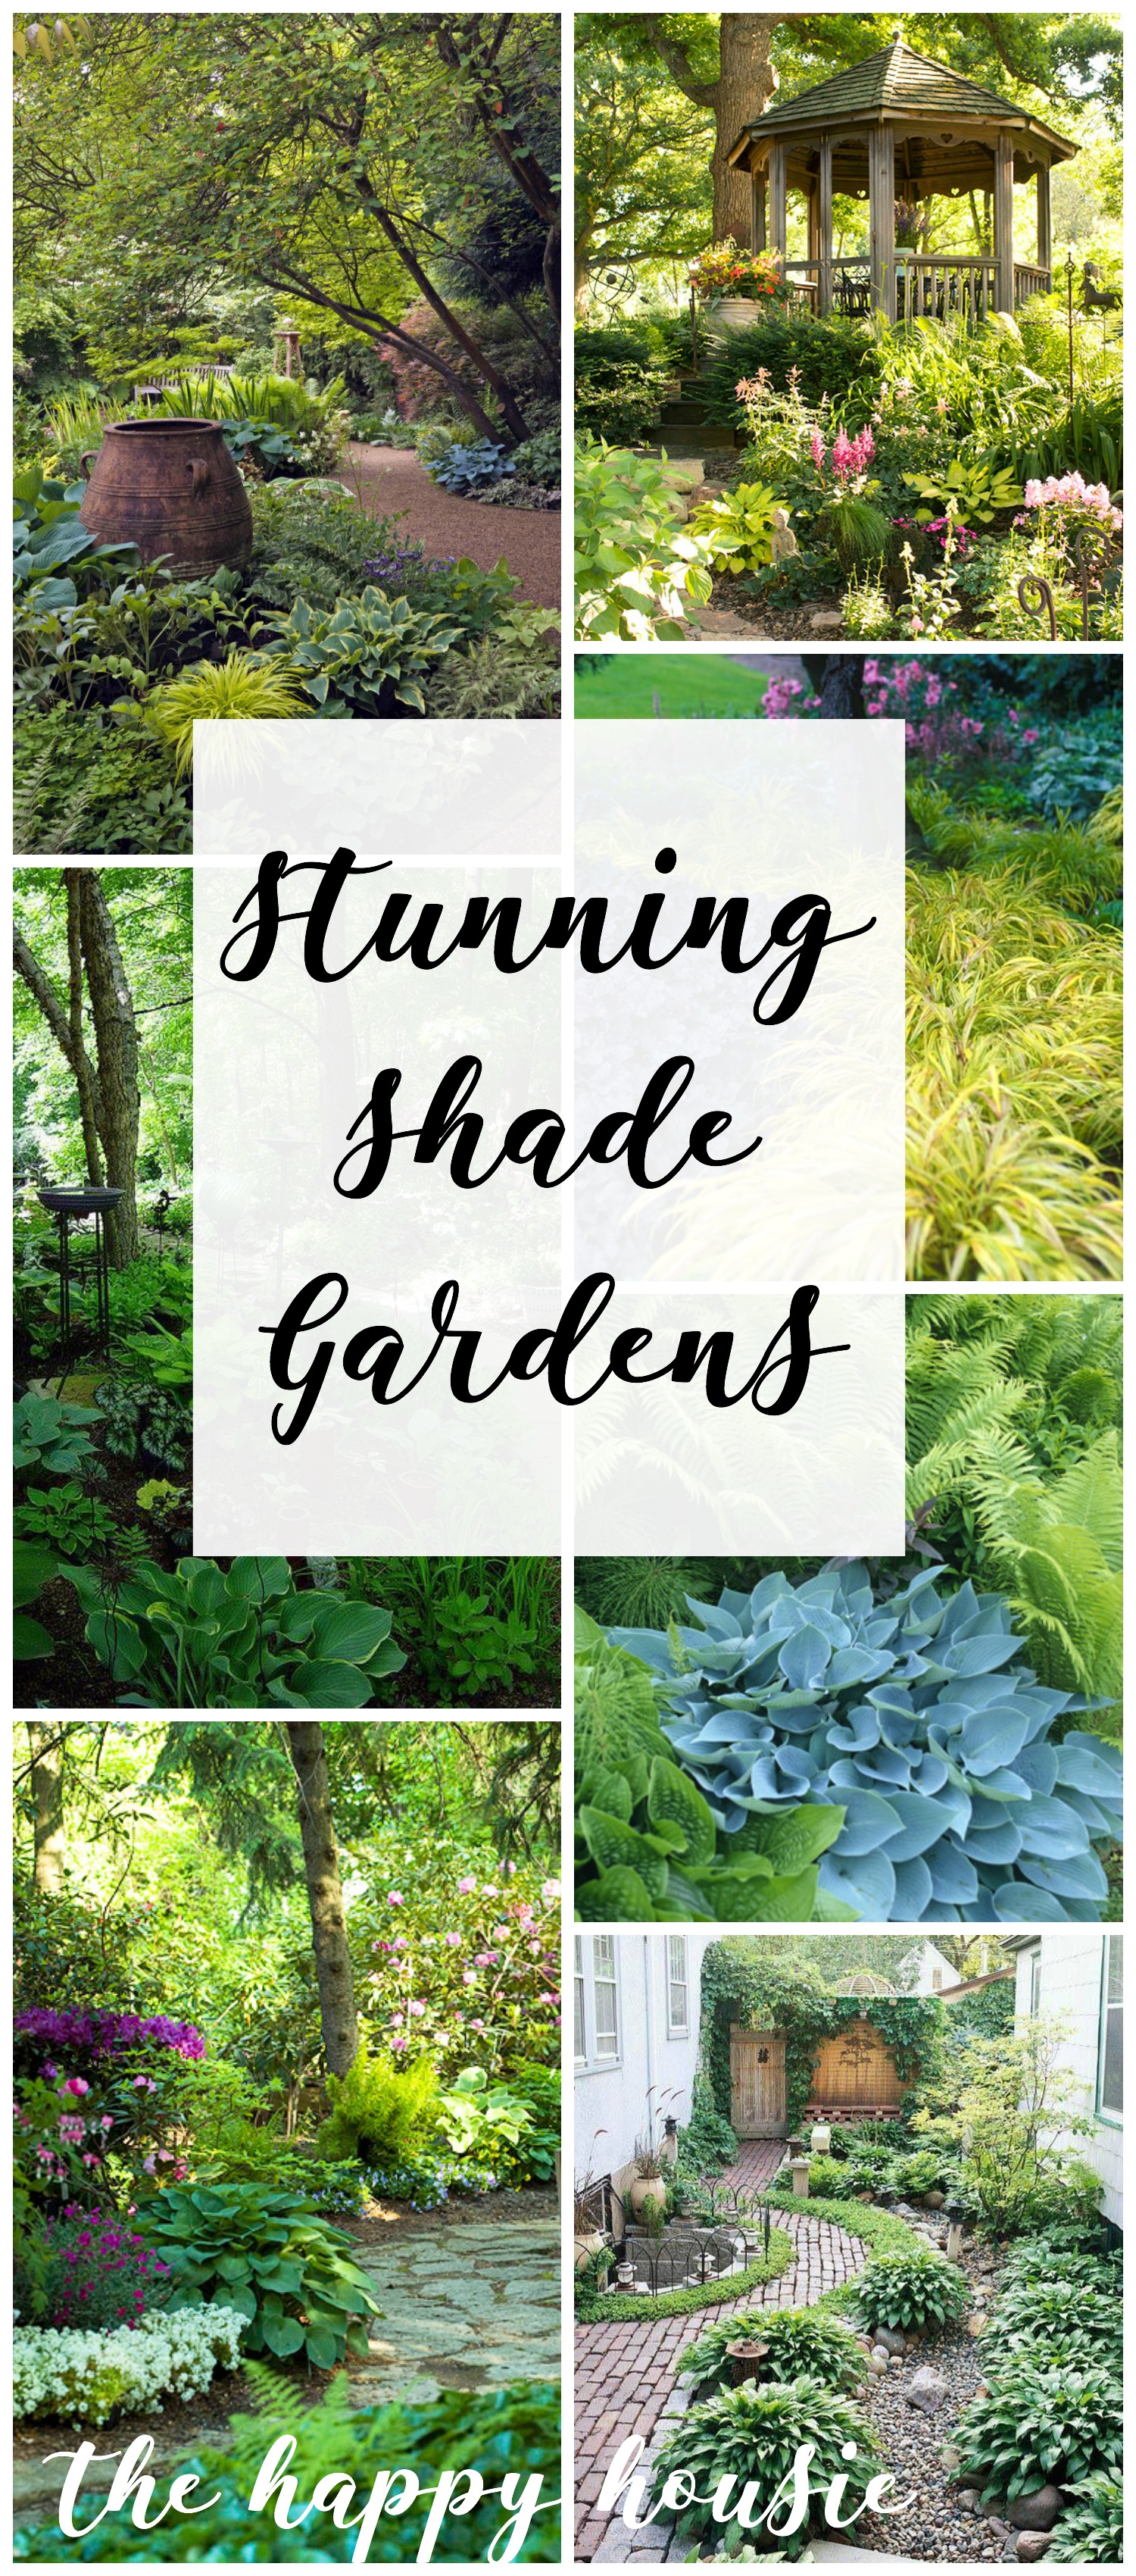 Stunning Shade Gardens poster.